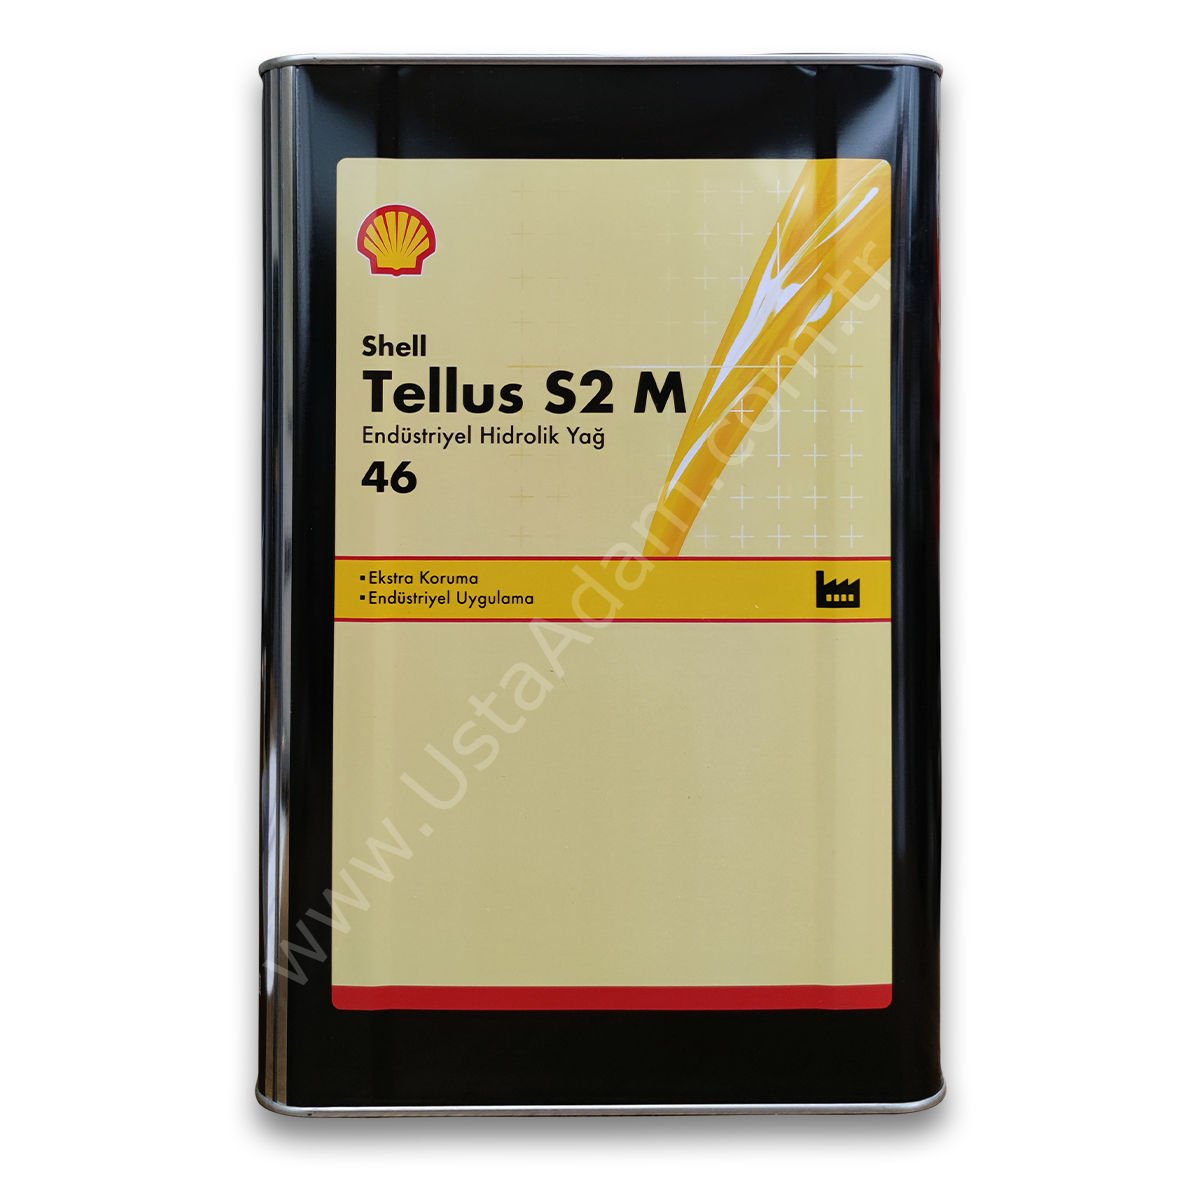 Shell Tellus S2 M 46 Endüstriyel Hidrolik Yağı - 16 LT